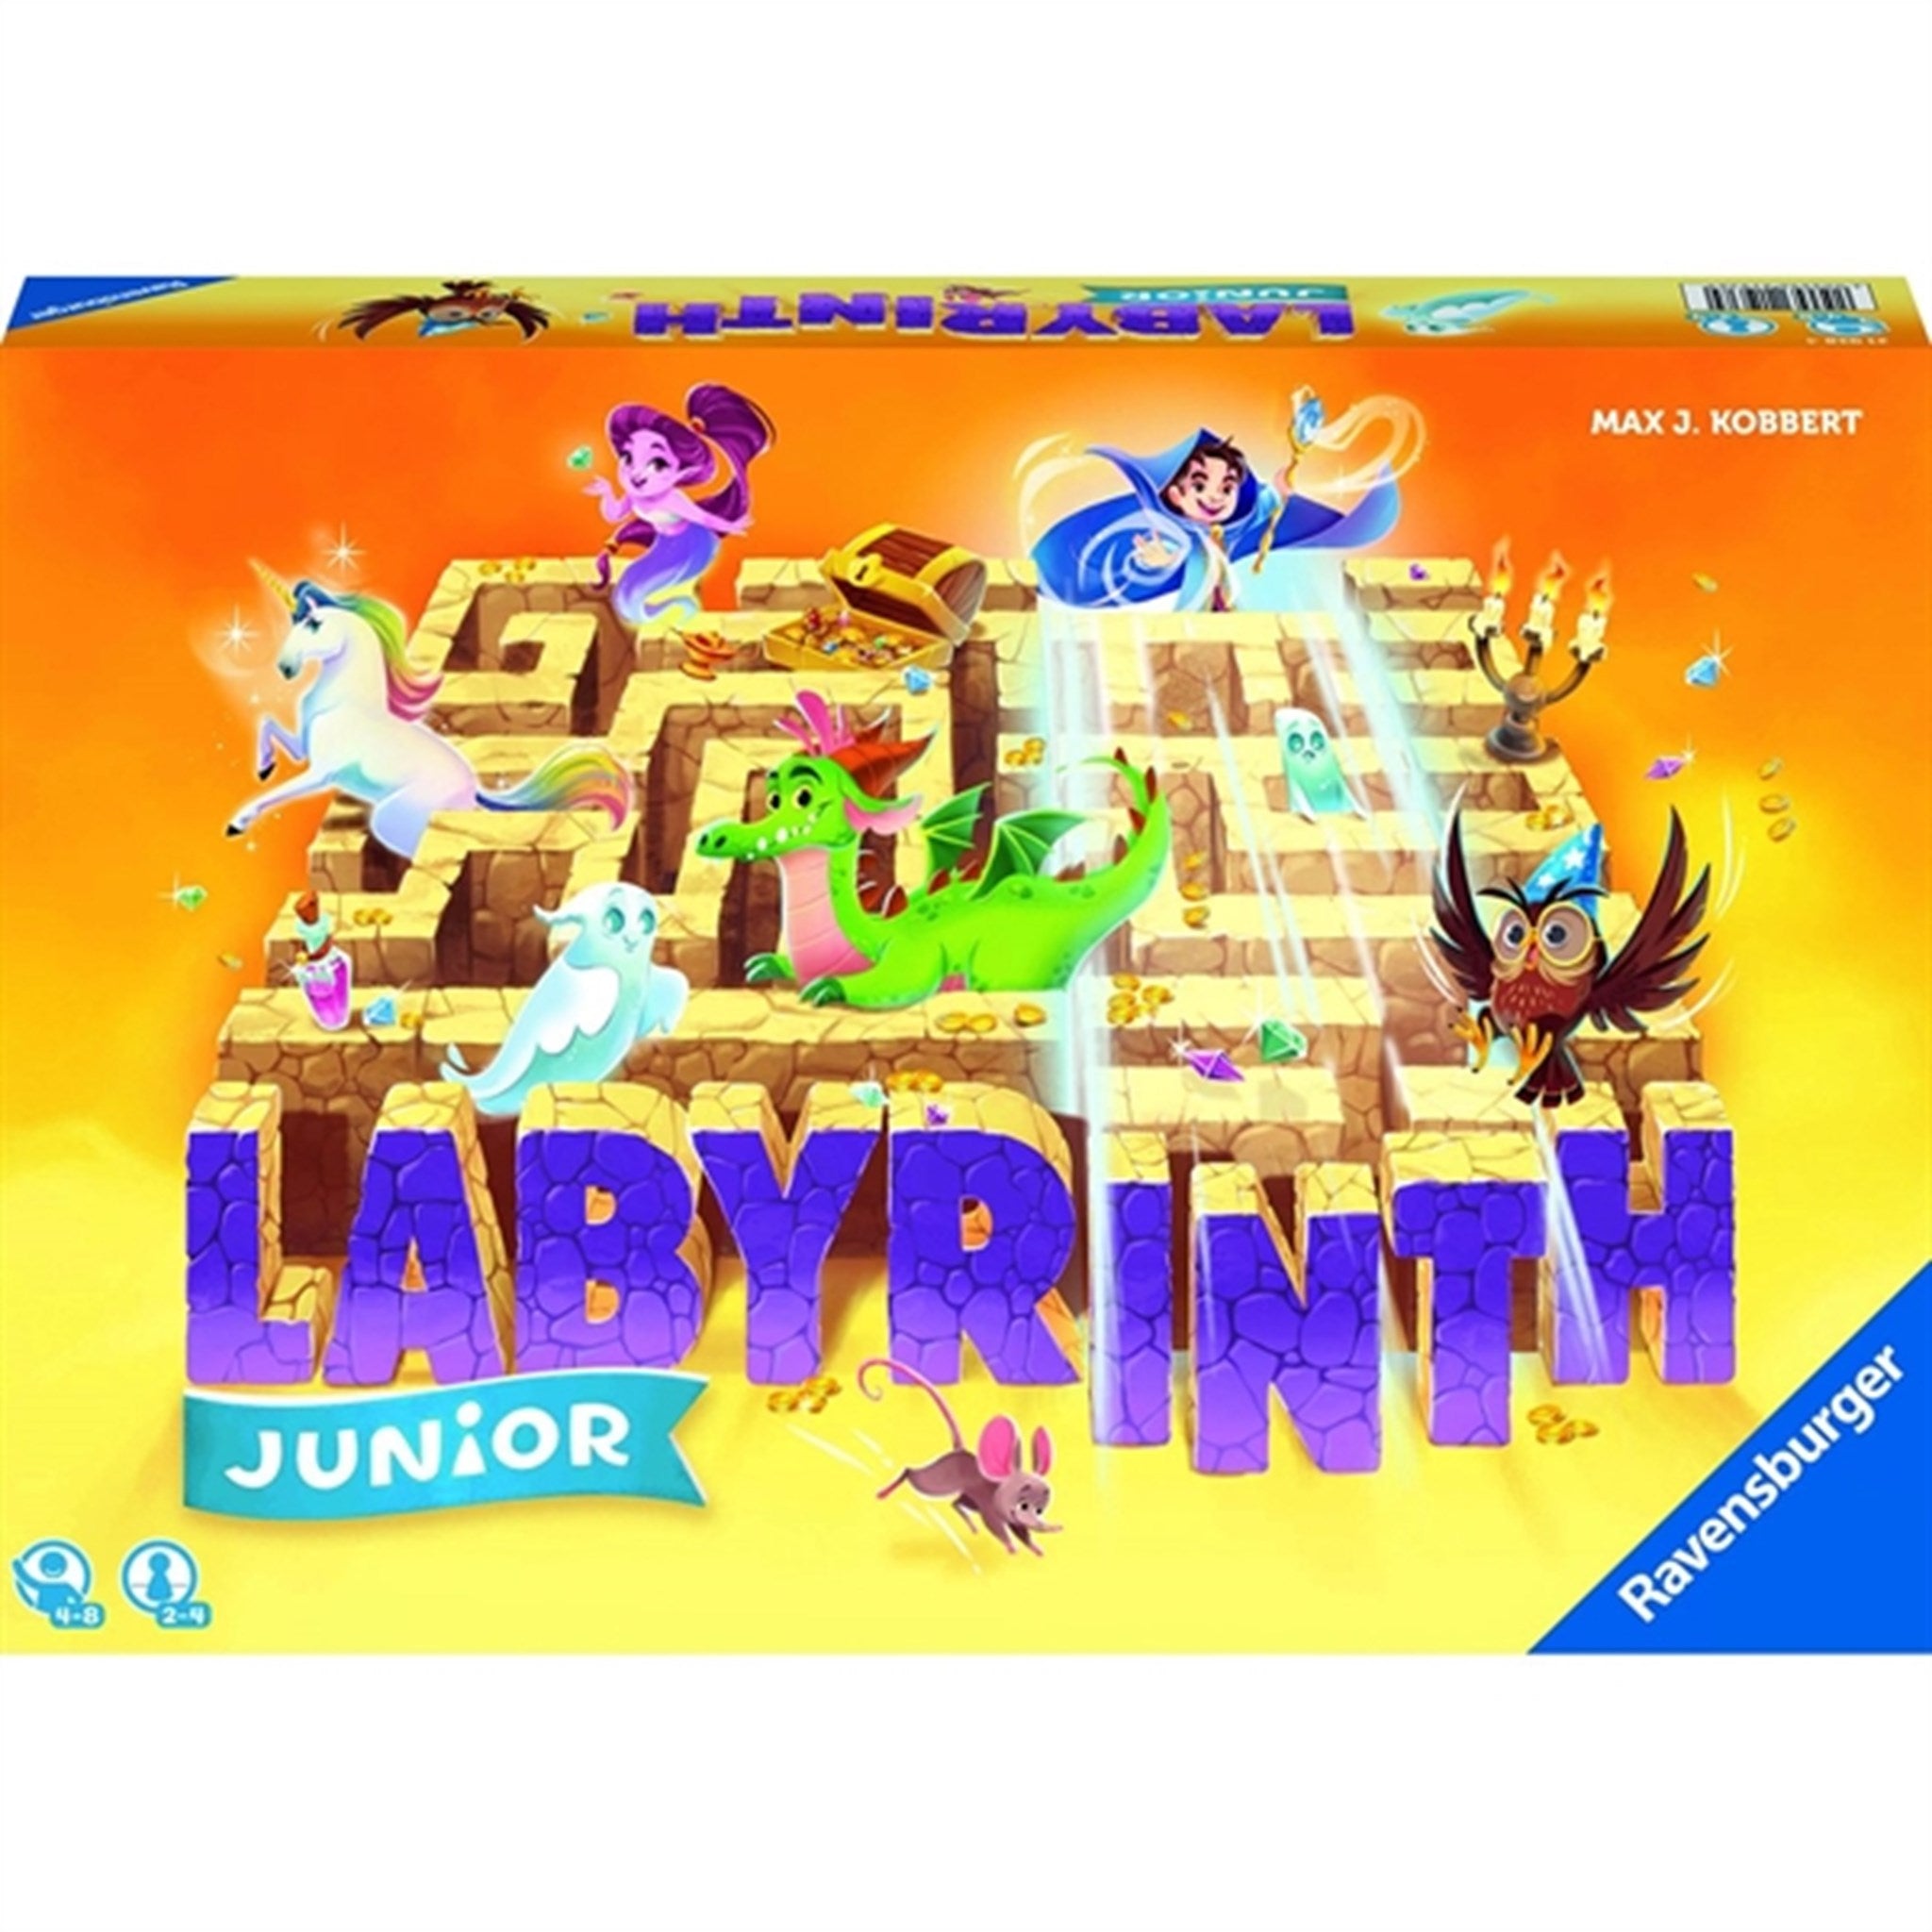 Ravensburger Junior Labyrinth Board Game